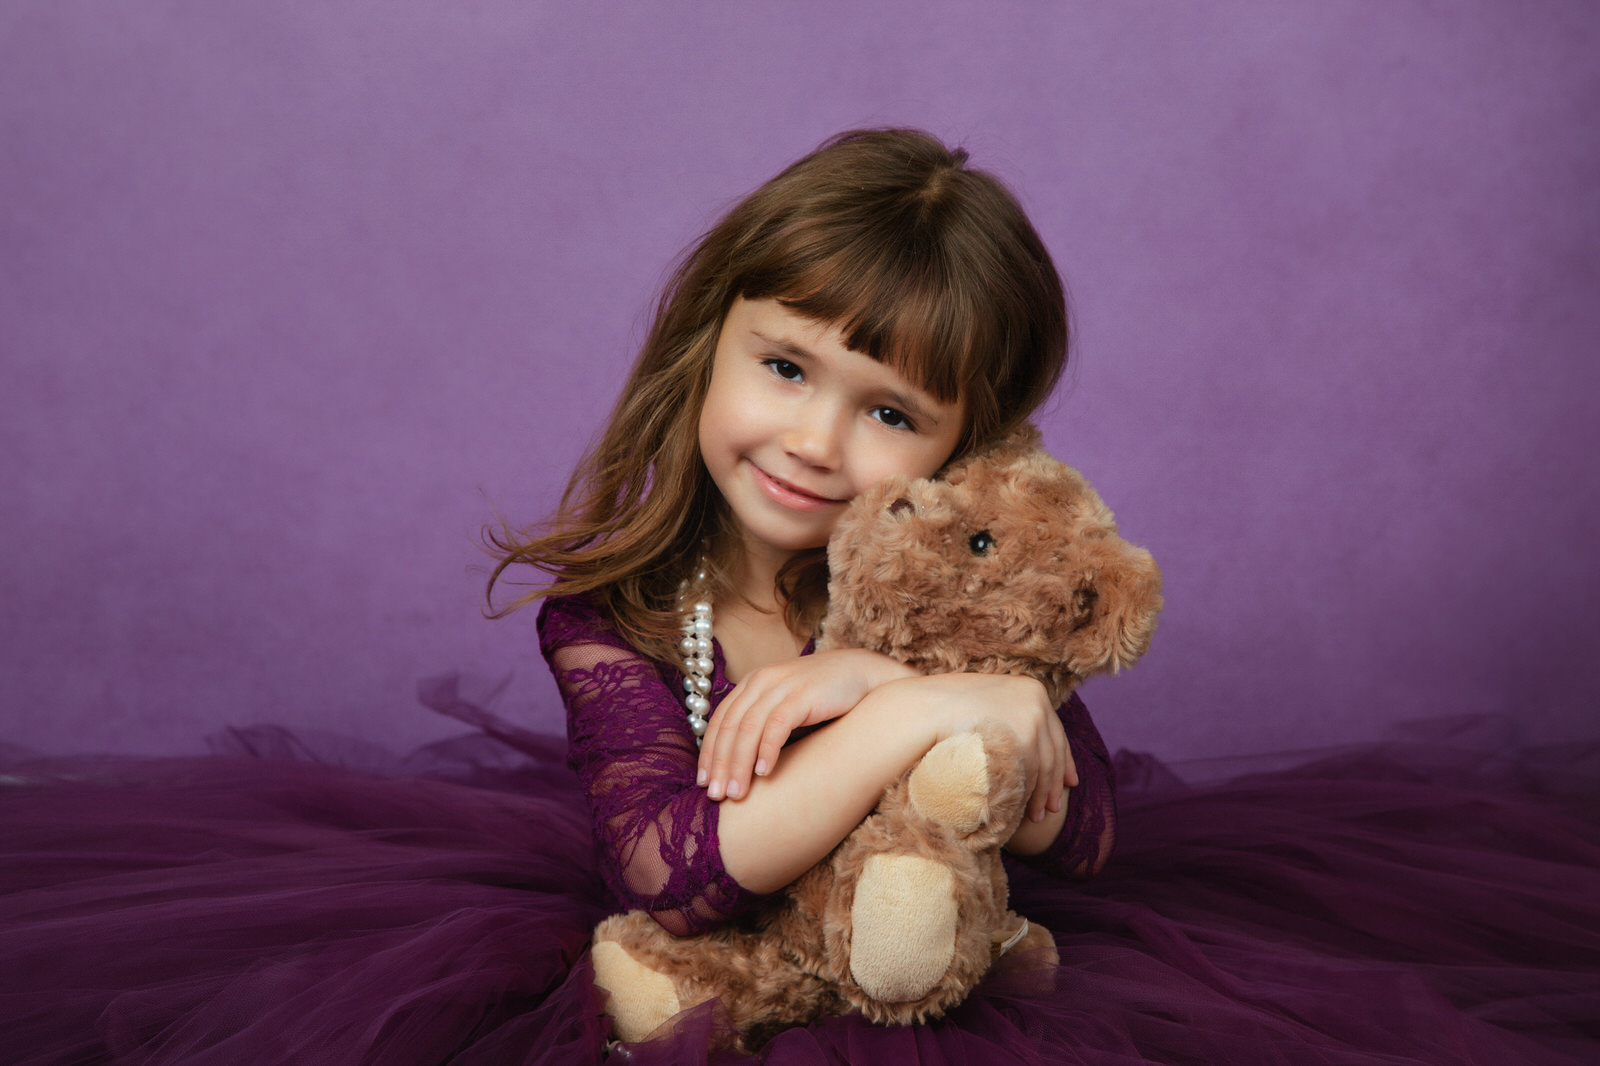 A young girl in a purple dress hugs onto a teddy bear in a studio